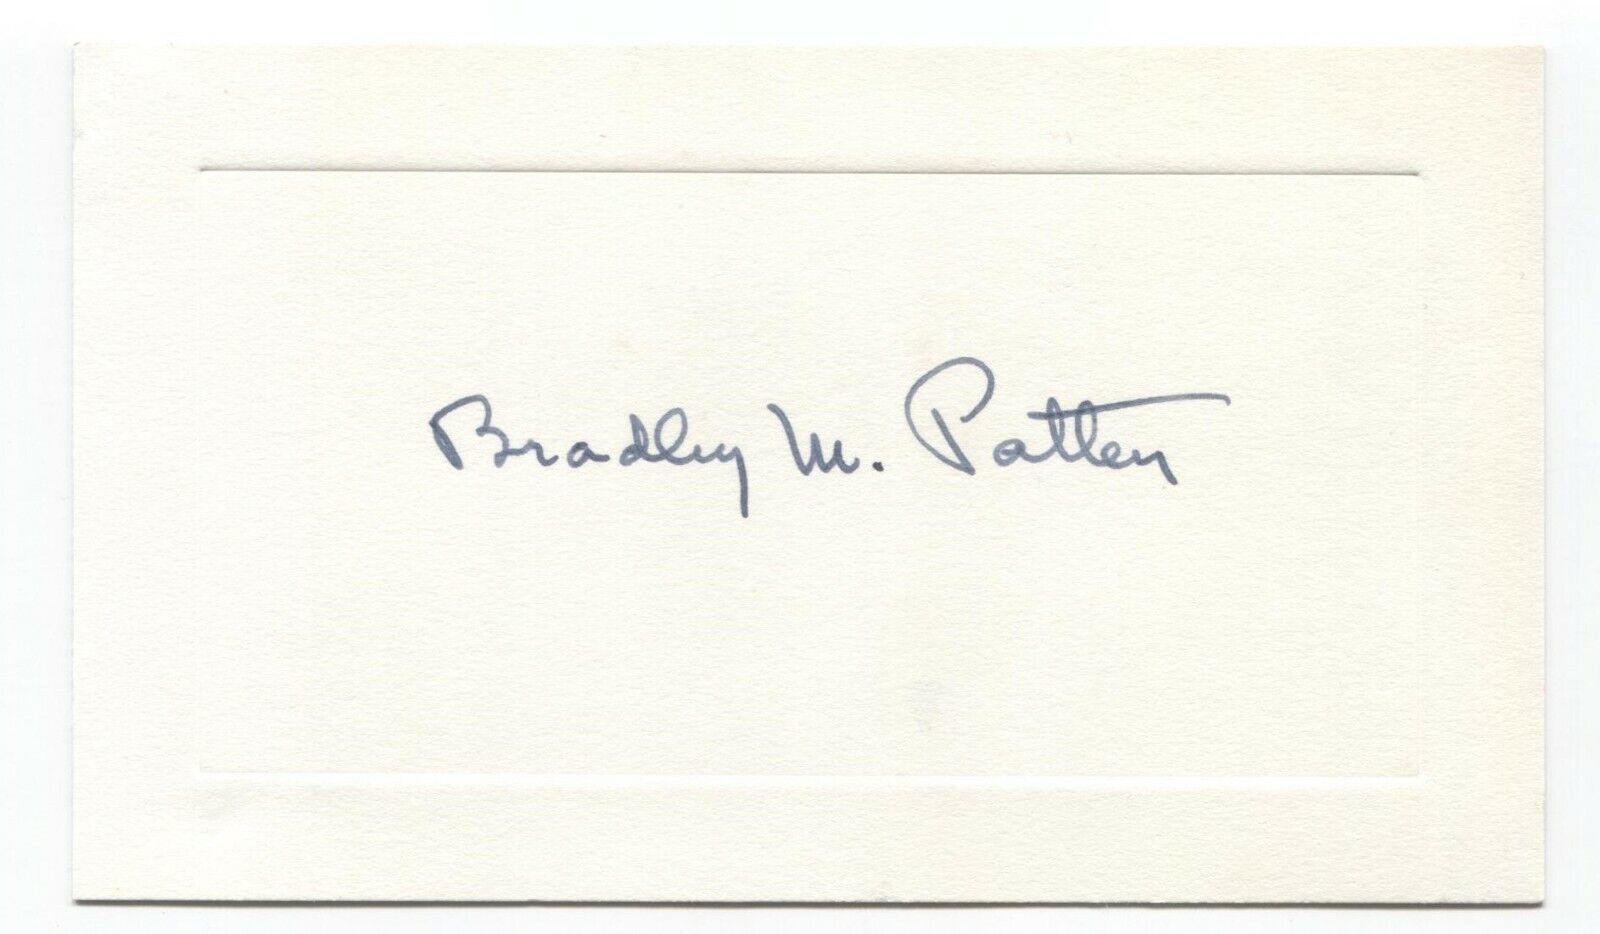 Dr. Bradley M. Patten Signed Card Autographed Signature Embryologist Scientist